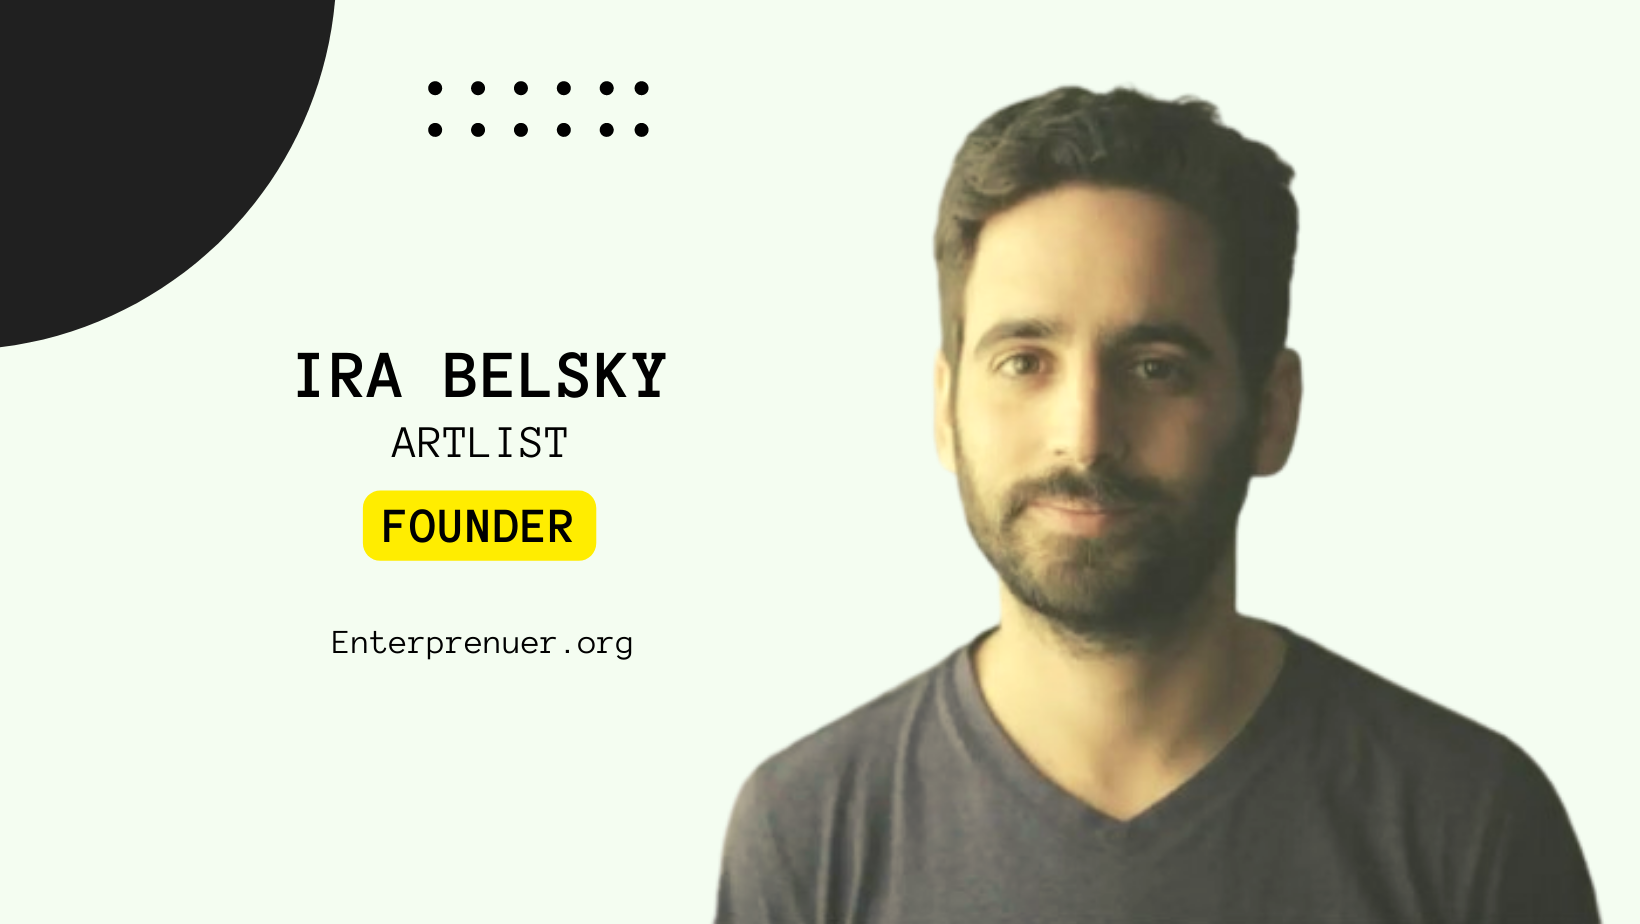 Ira Belsky Co-Founder of Artlist